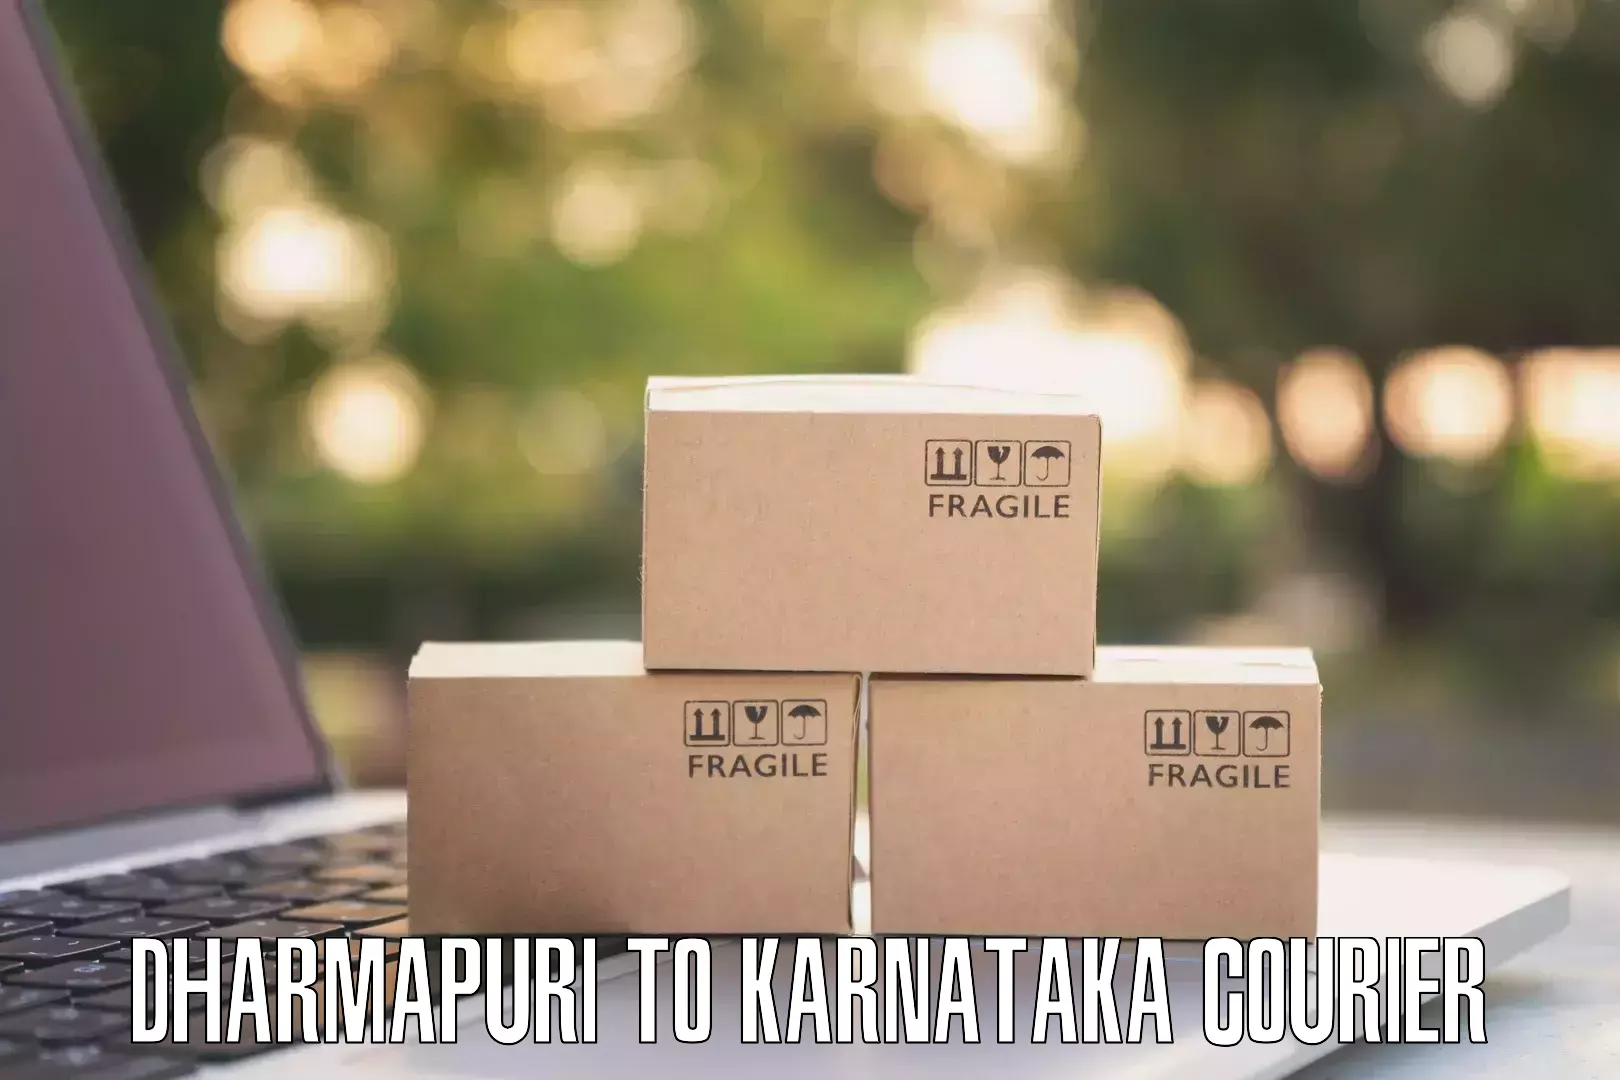 Global shipping networks Dharmapuri to Manipal